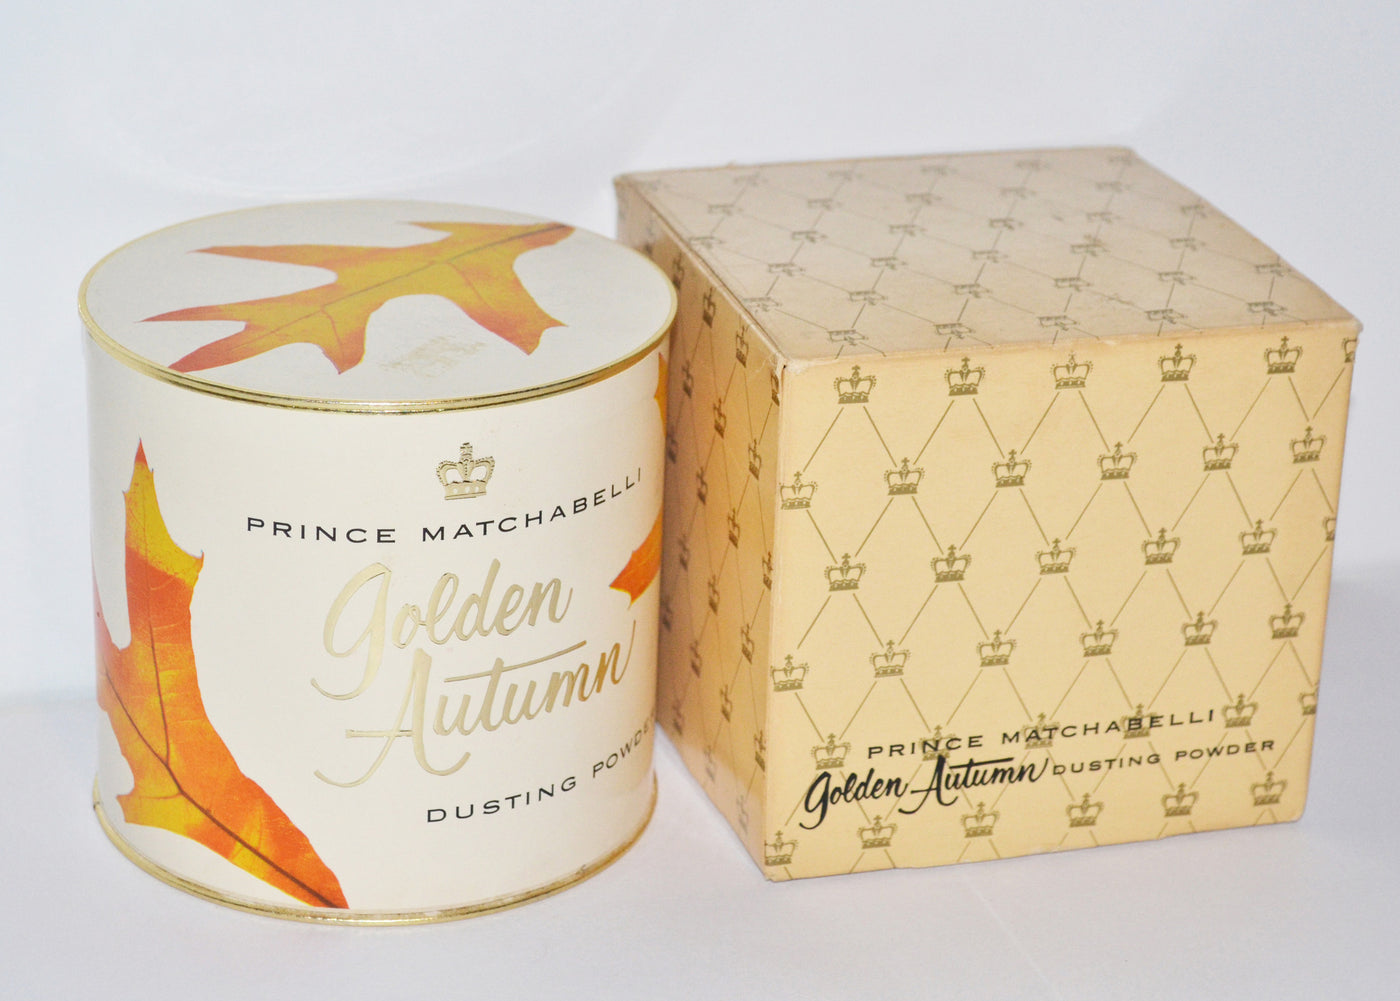 Prince Matchabelli Golden Autumn Perfume Dusting Powder